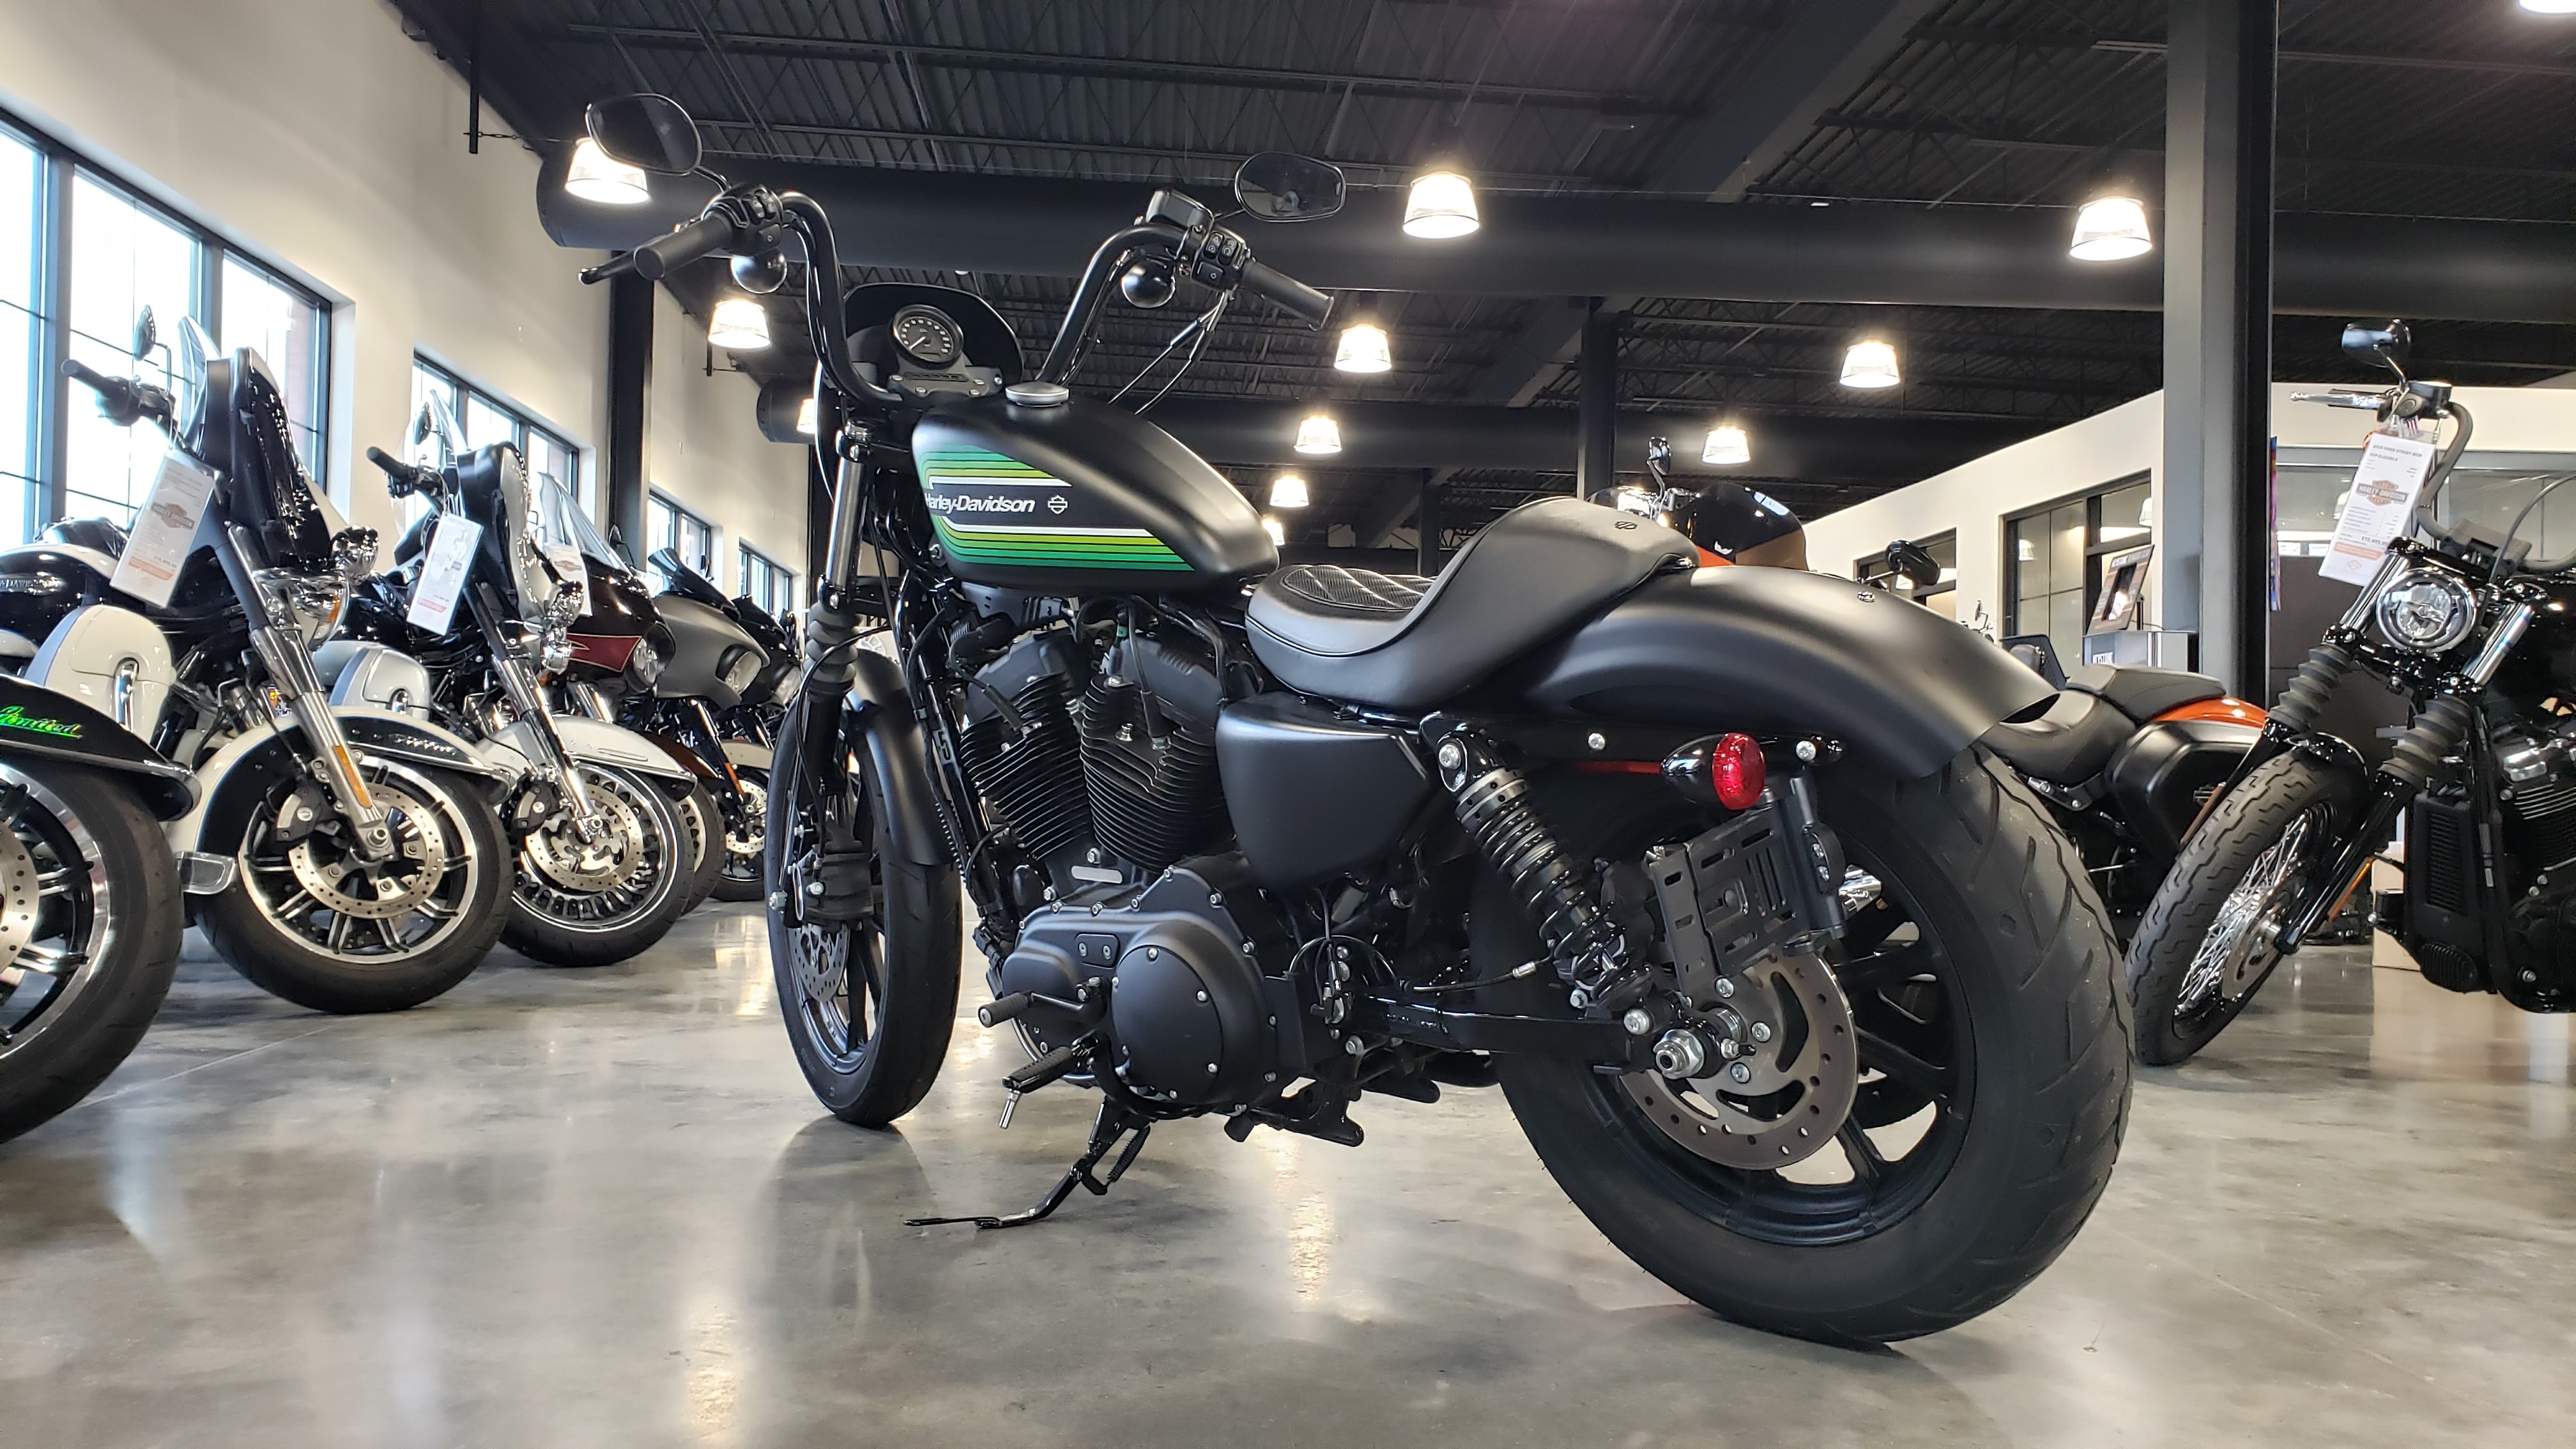 2021 Harley-Davidson Cruiser XL 1200NS Iron 1200 at Keystone Harley-Davidson